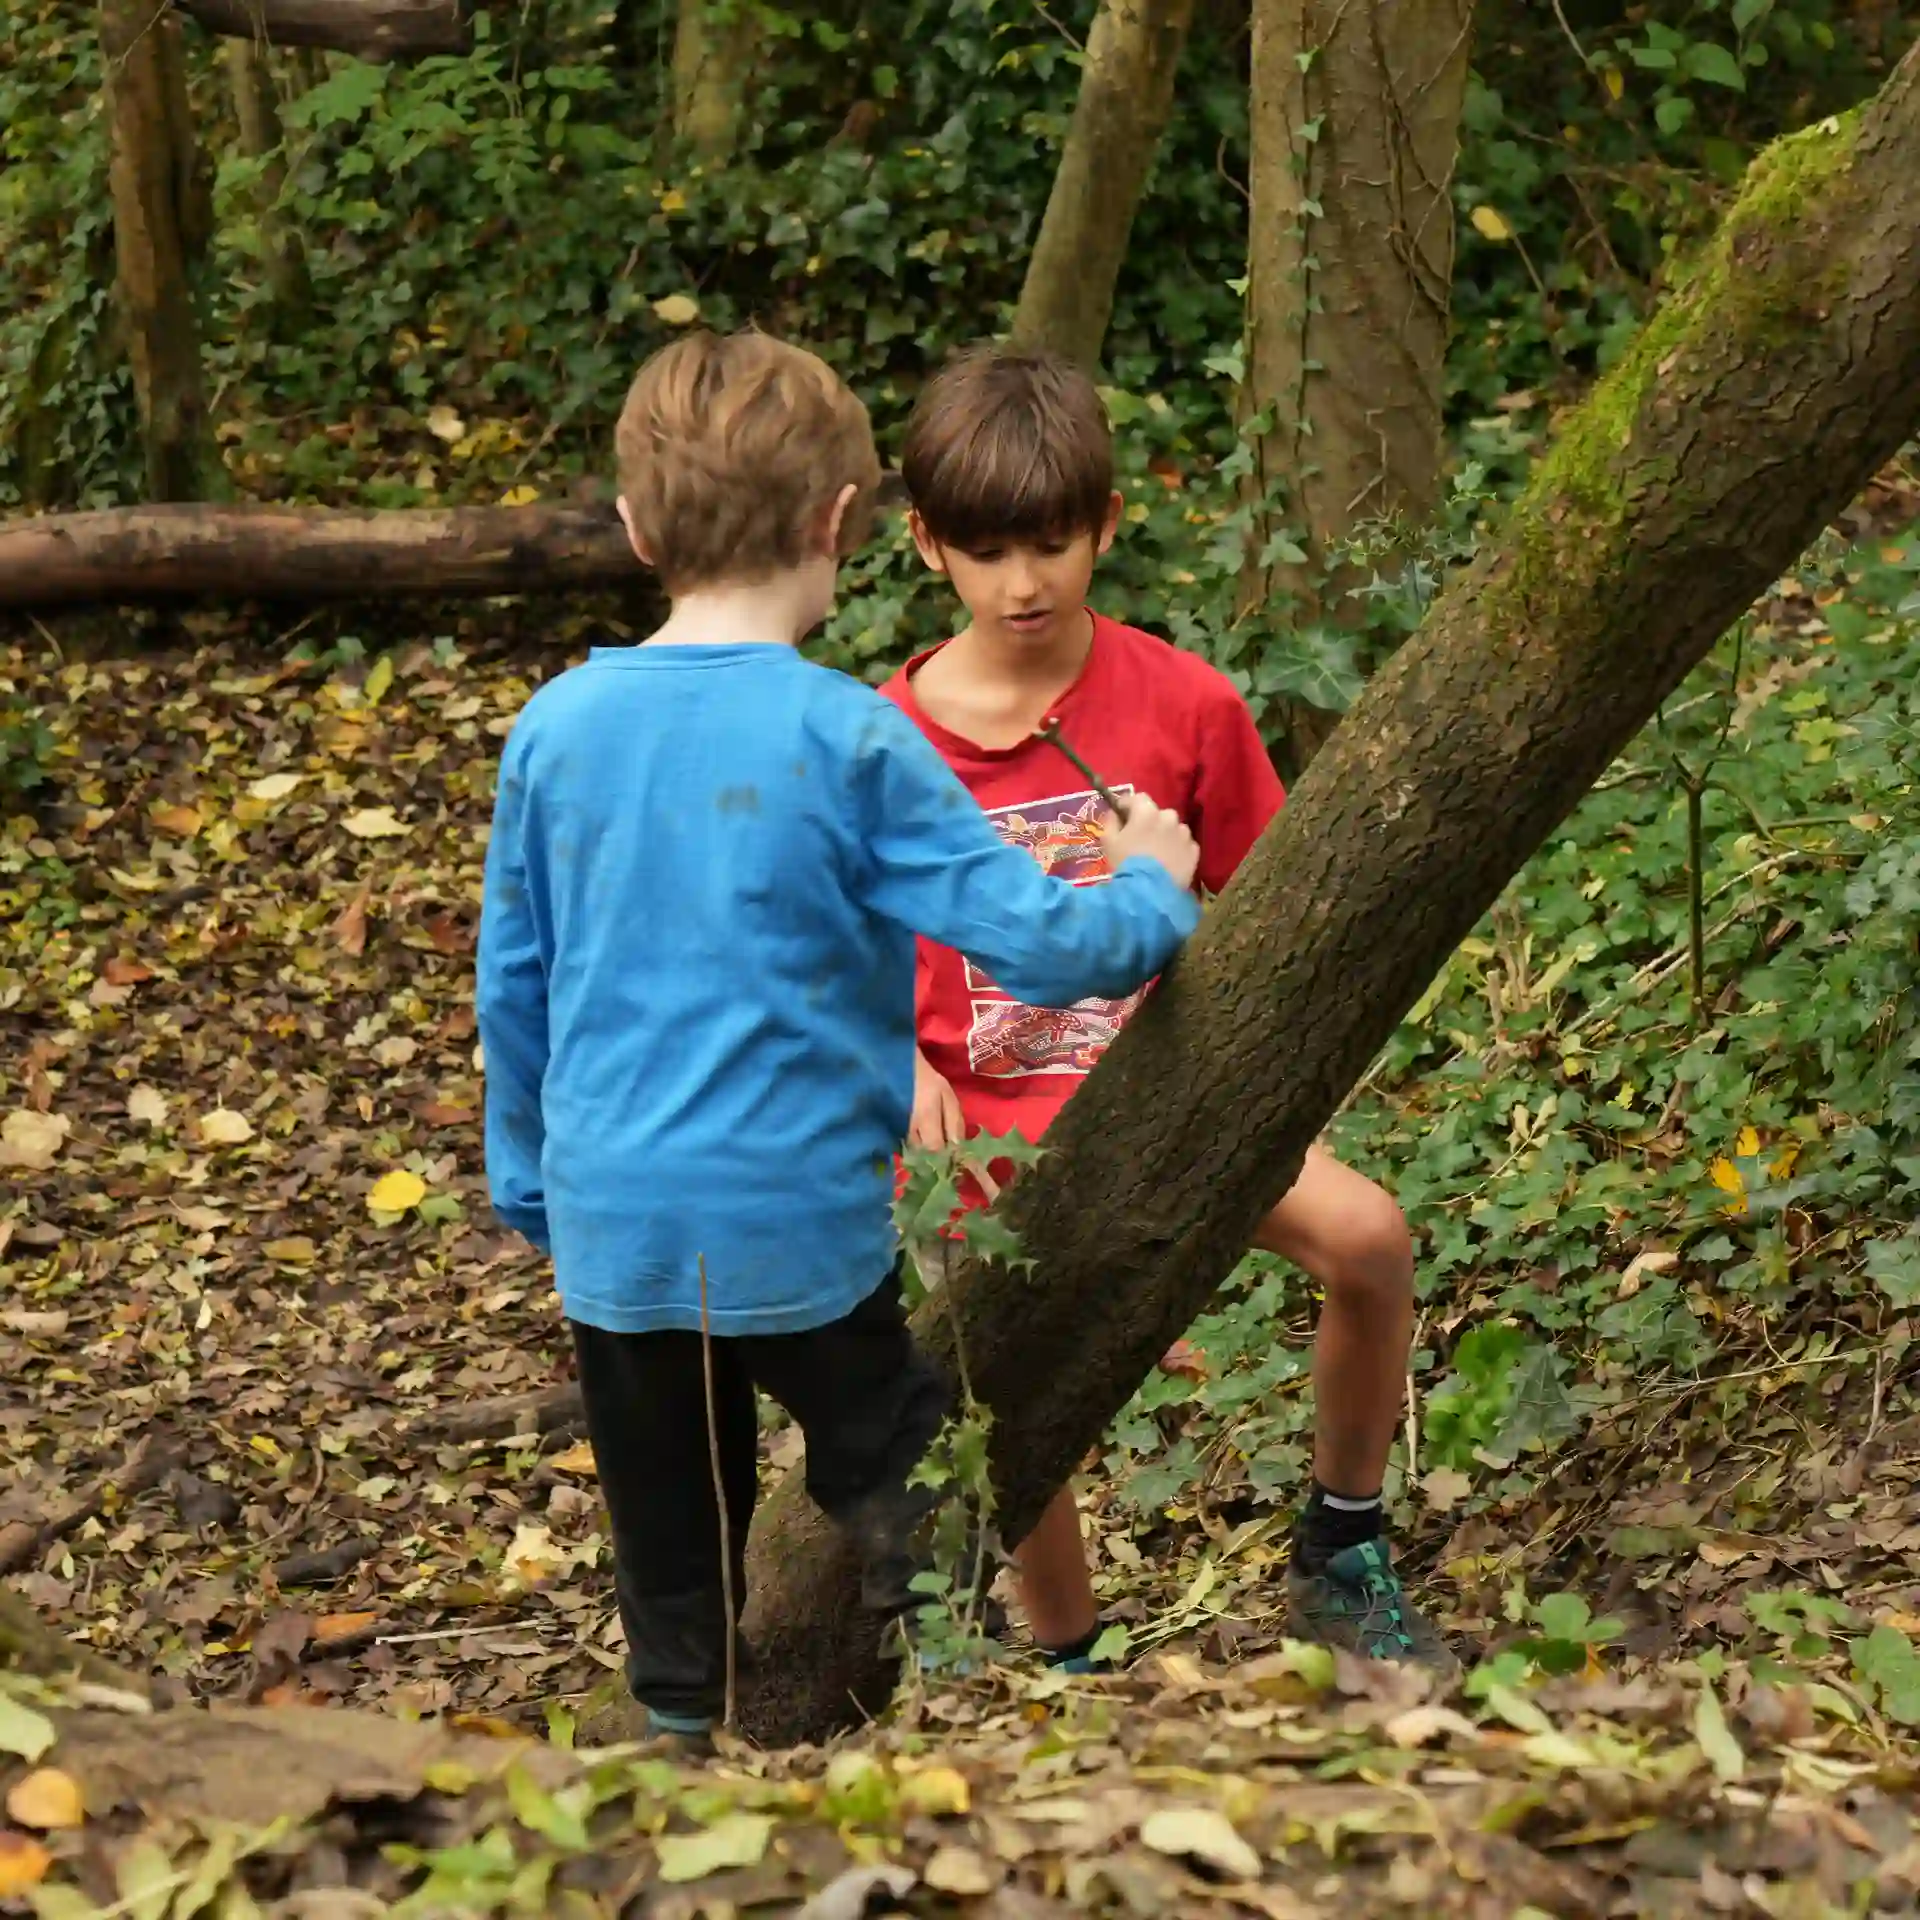 Two boys stood exploring the woodland.